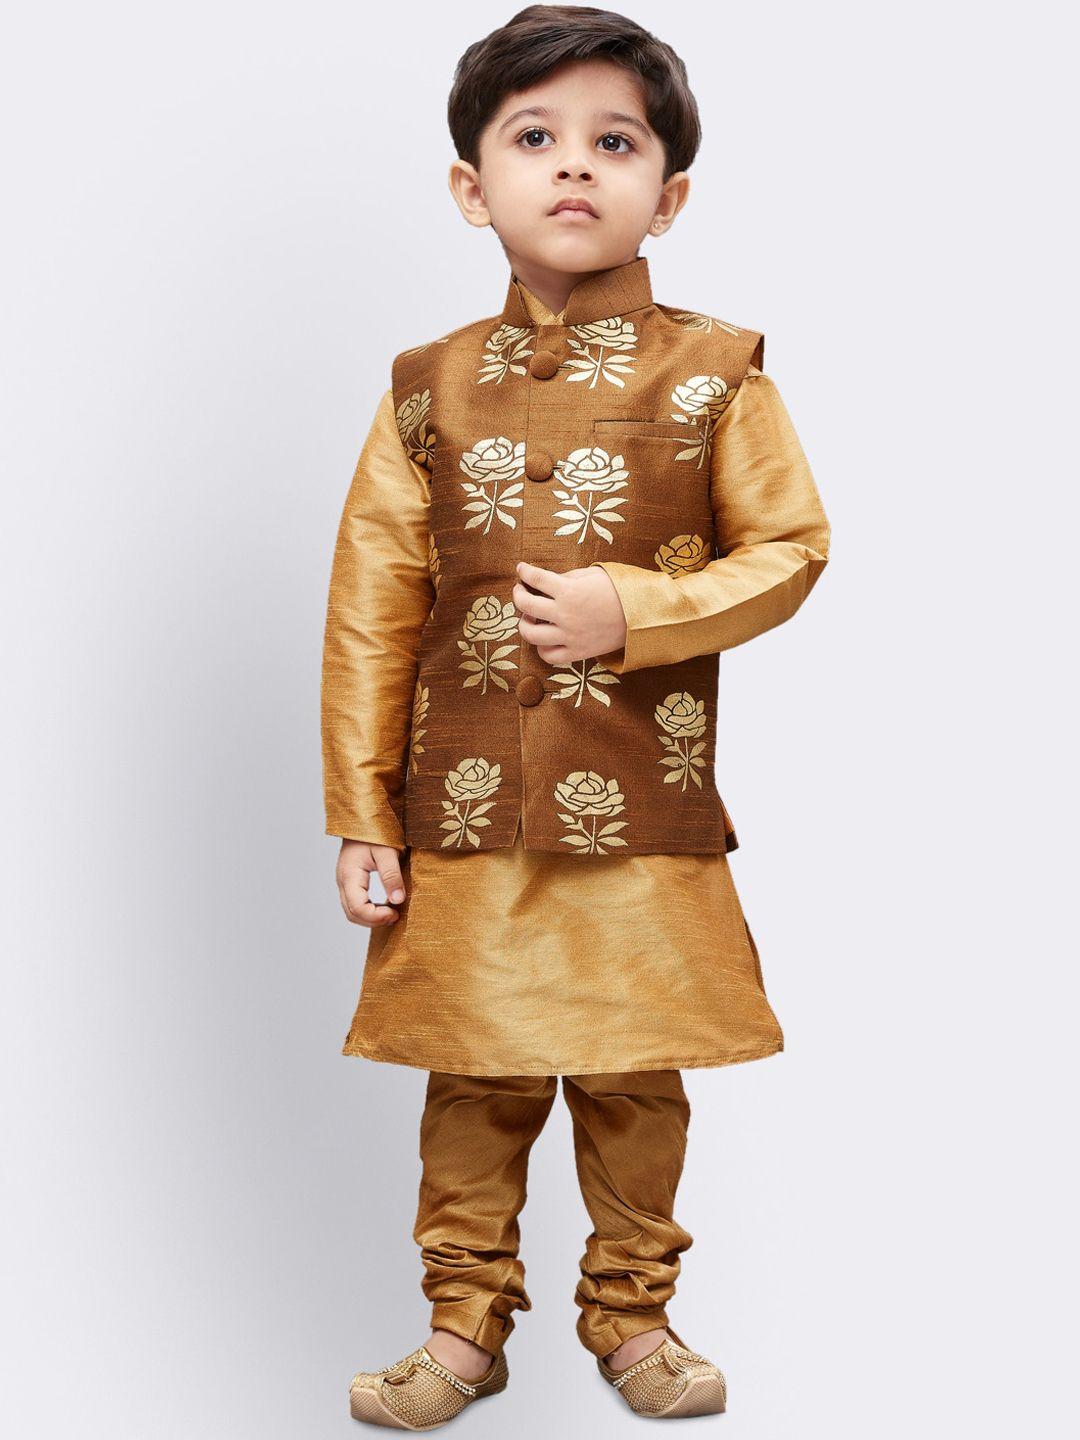 jbn creation boys gold-toned regular kurta set with nehru jacket